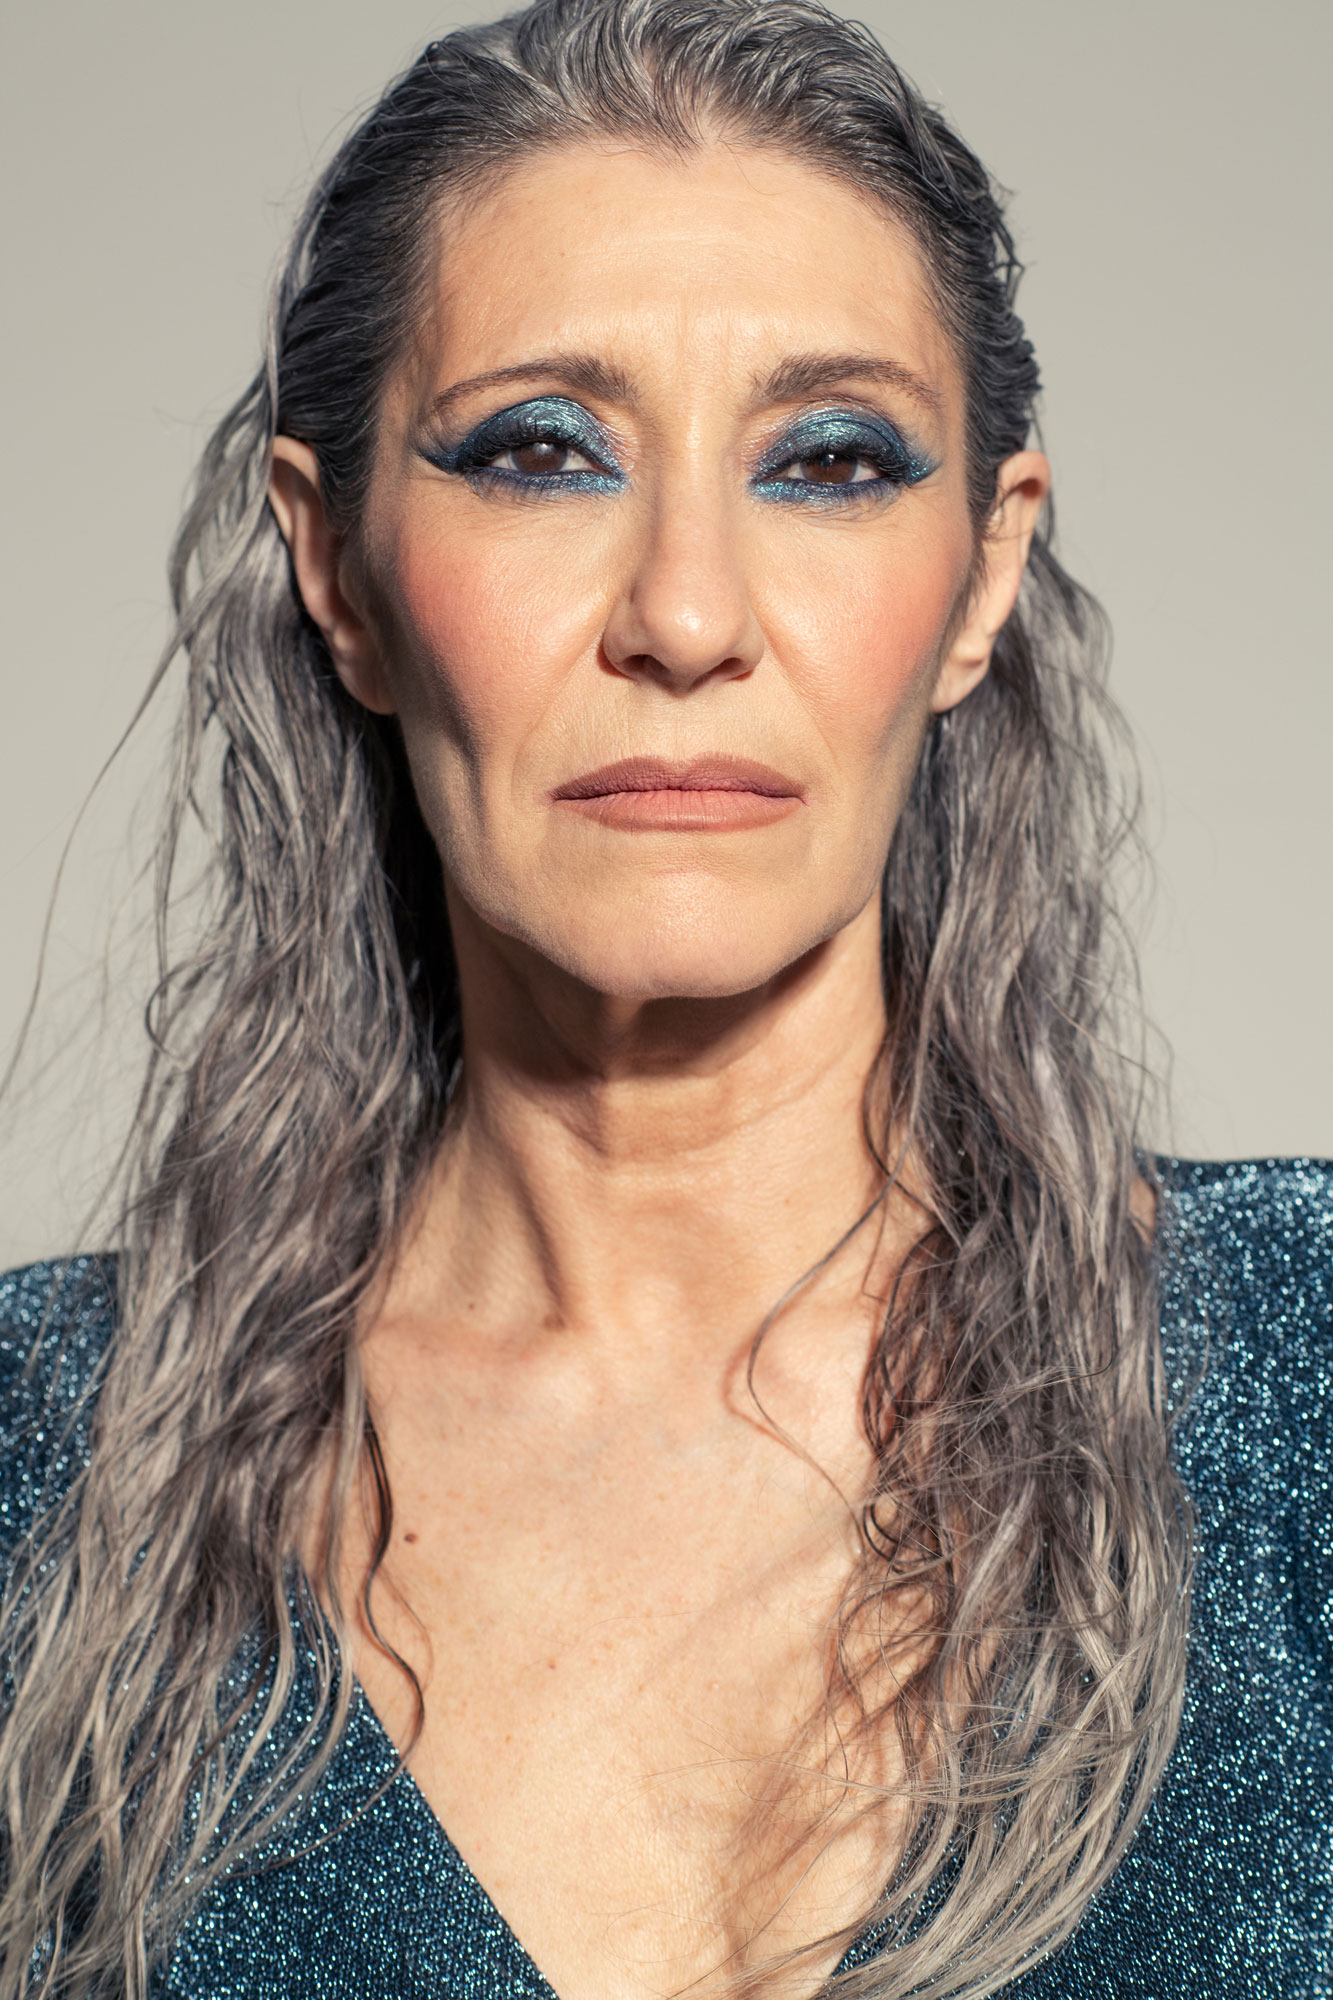 Grey hair model Valeria Sechi for Pharmacos' adv campaign.